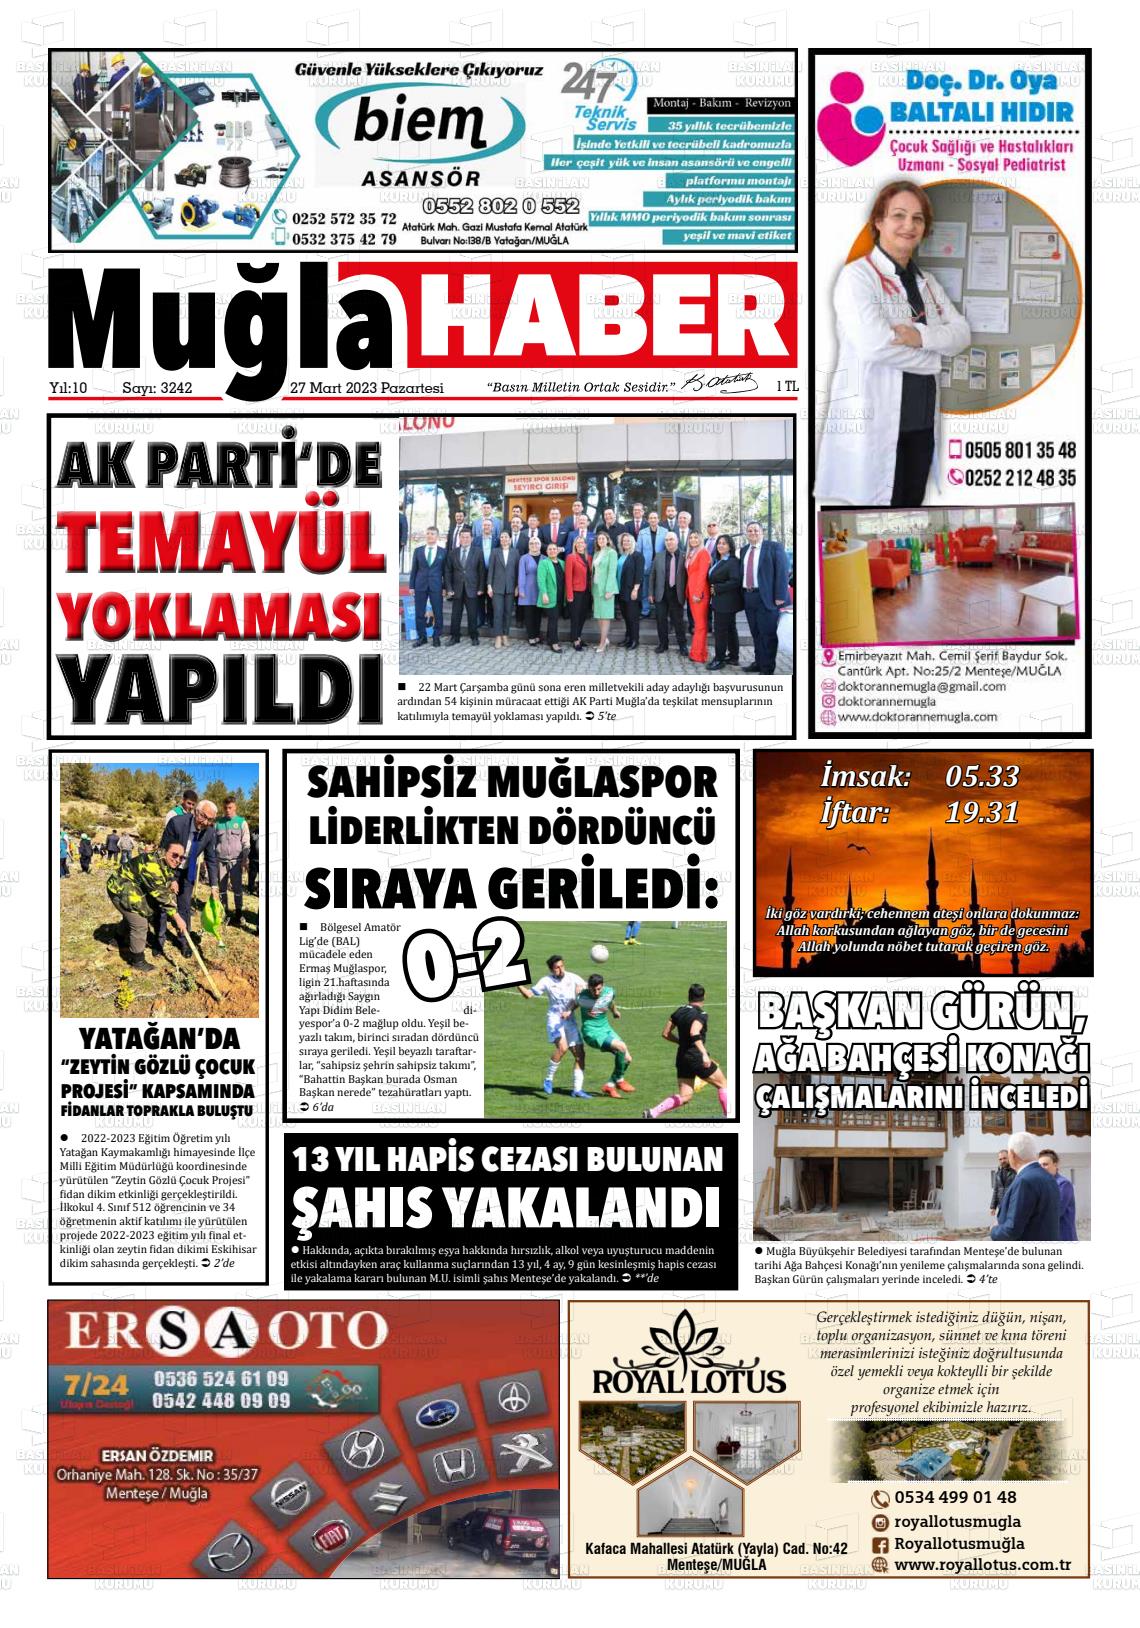 27 Mart 2023 Muğla Haber Gazete Manşeti